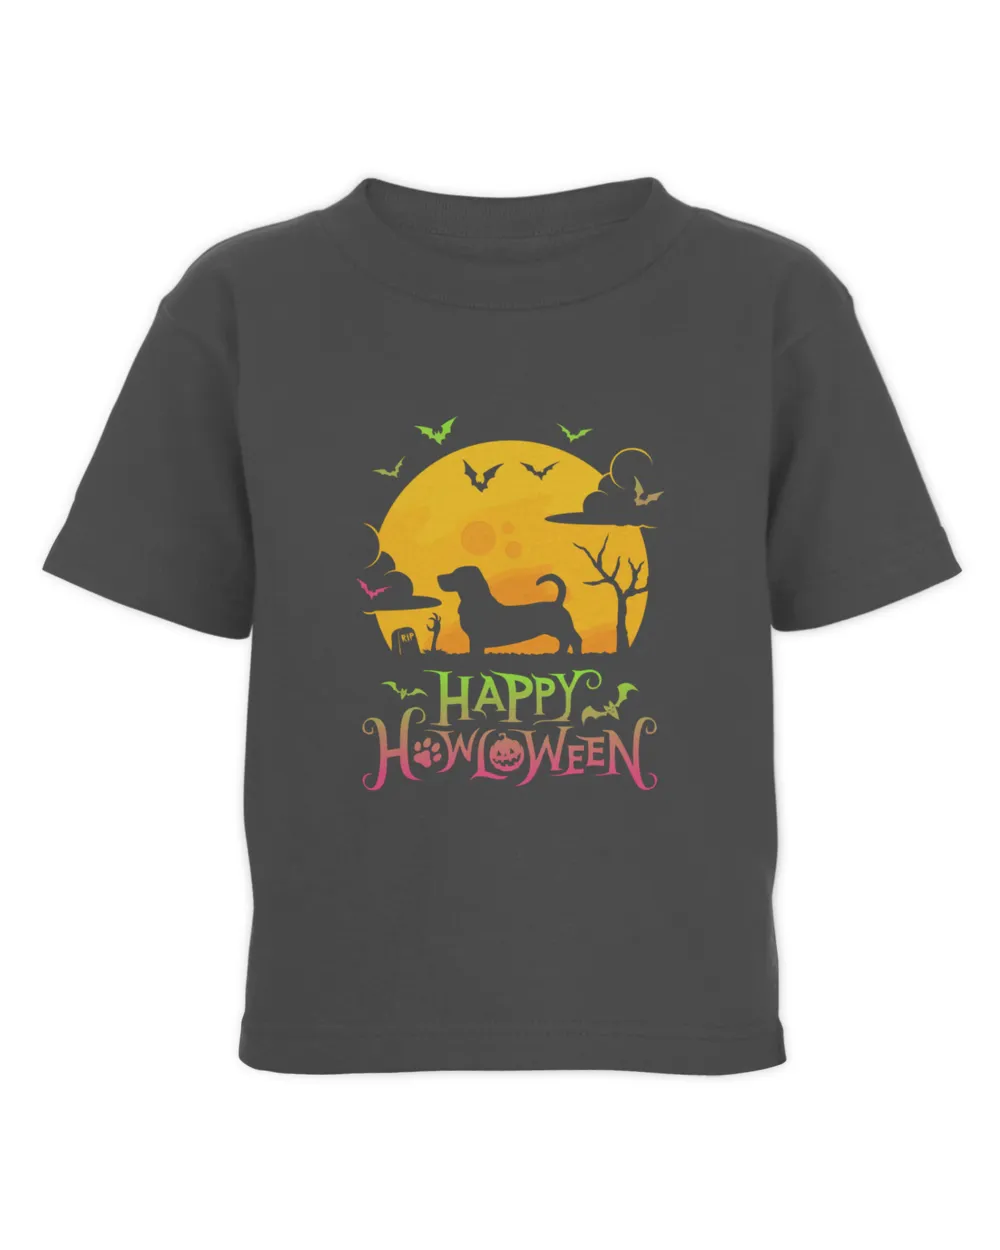 basset-hound-happy-halloween-costume-dog-boo Tank tops Hoodies Sweatshirt